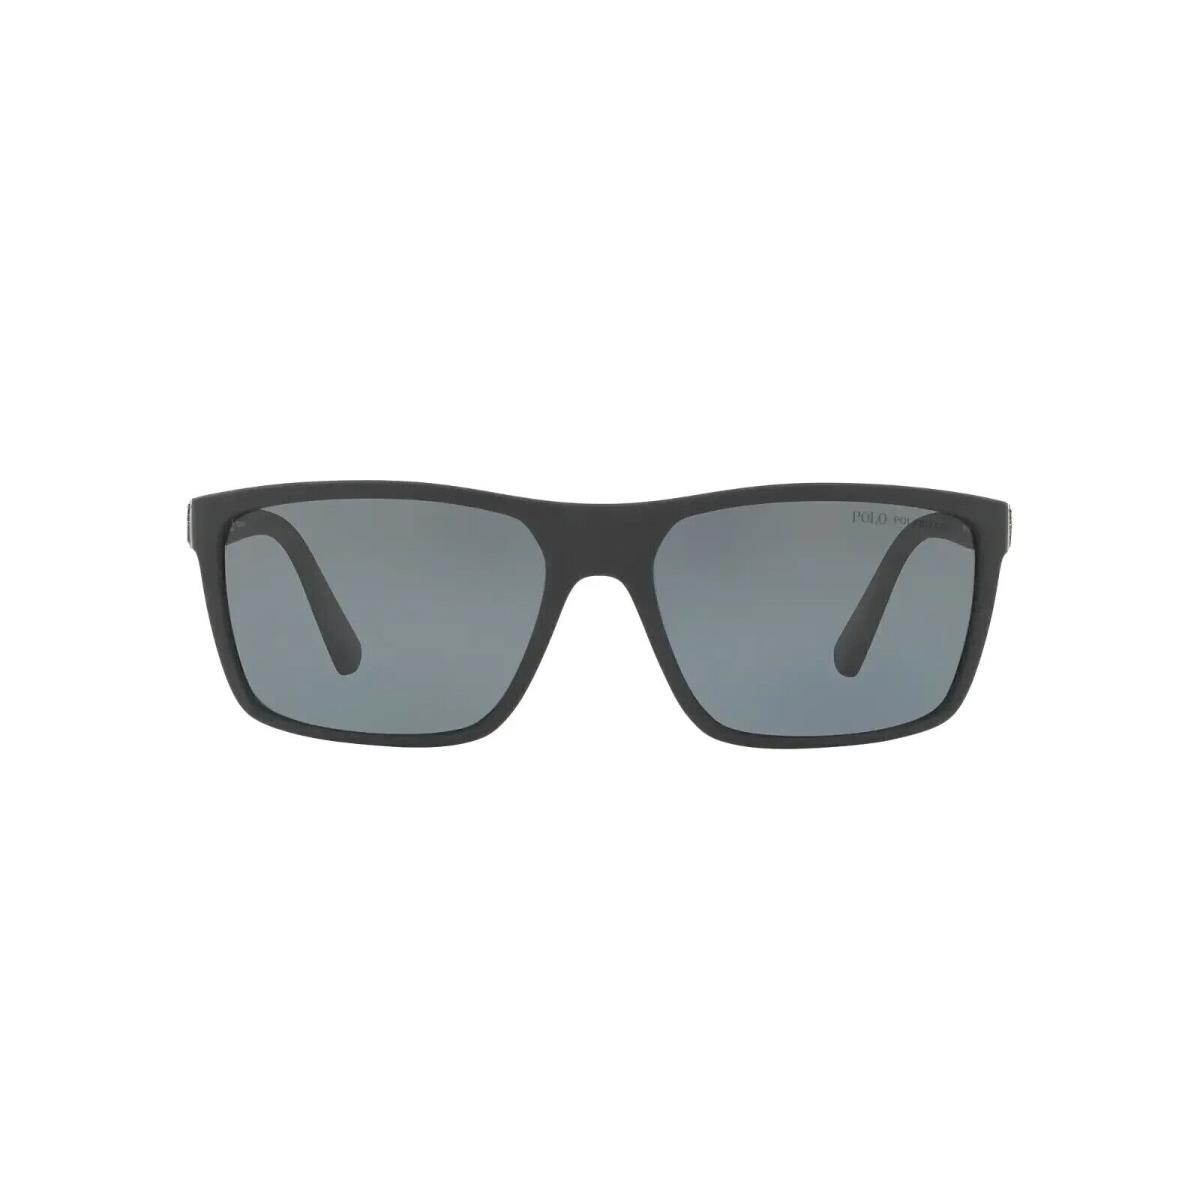 Polo Ralph Lauren Sunglasses 0PH4133 1793 Matte Black 59-17-145 W/case Box - Matte Black Frame, Dark Grey Lens